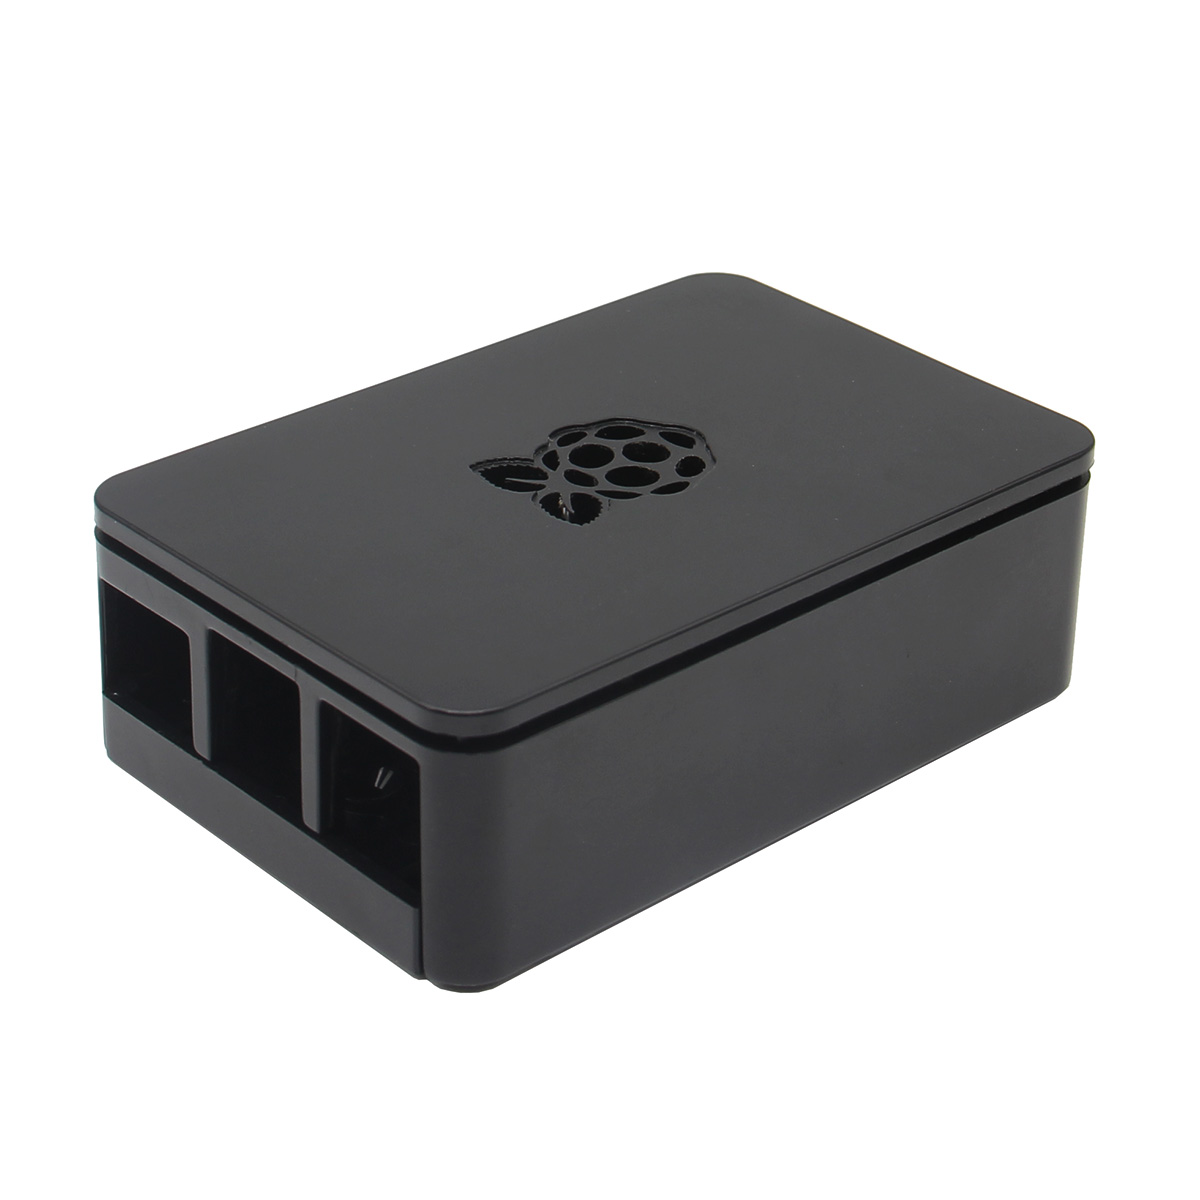 Black-Raspberry-Pi-Case-Enclosure-Box-V4-With-Heat-Sink-For-Raspberry-Pi-32B-1214732